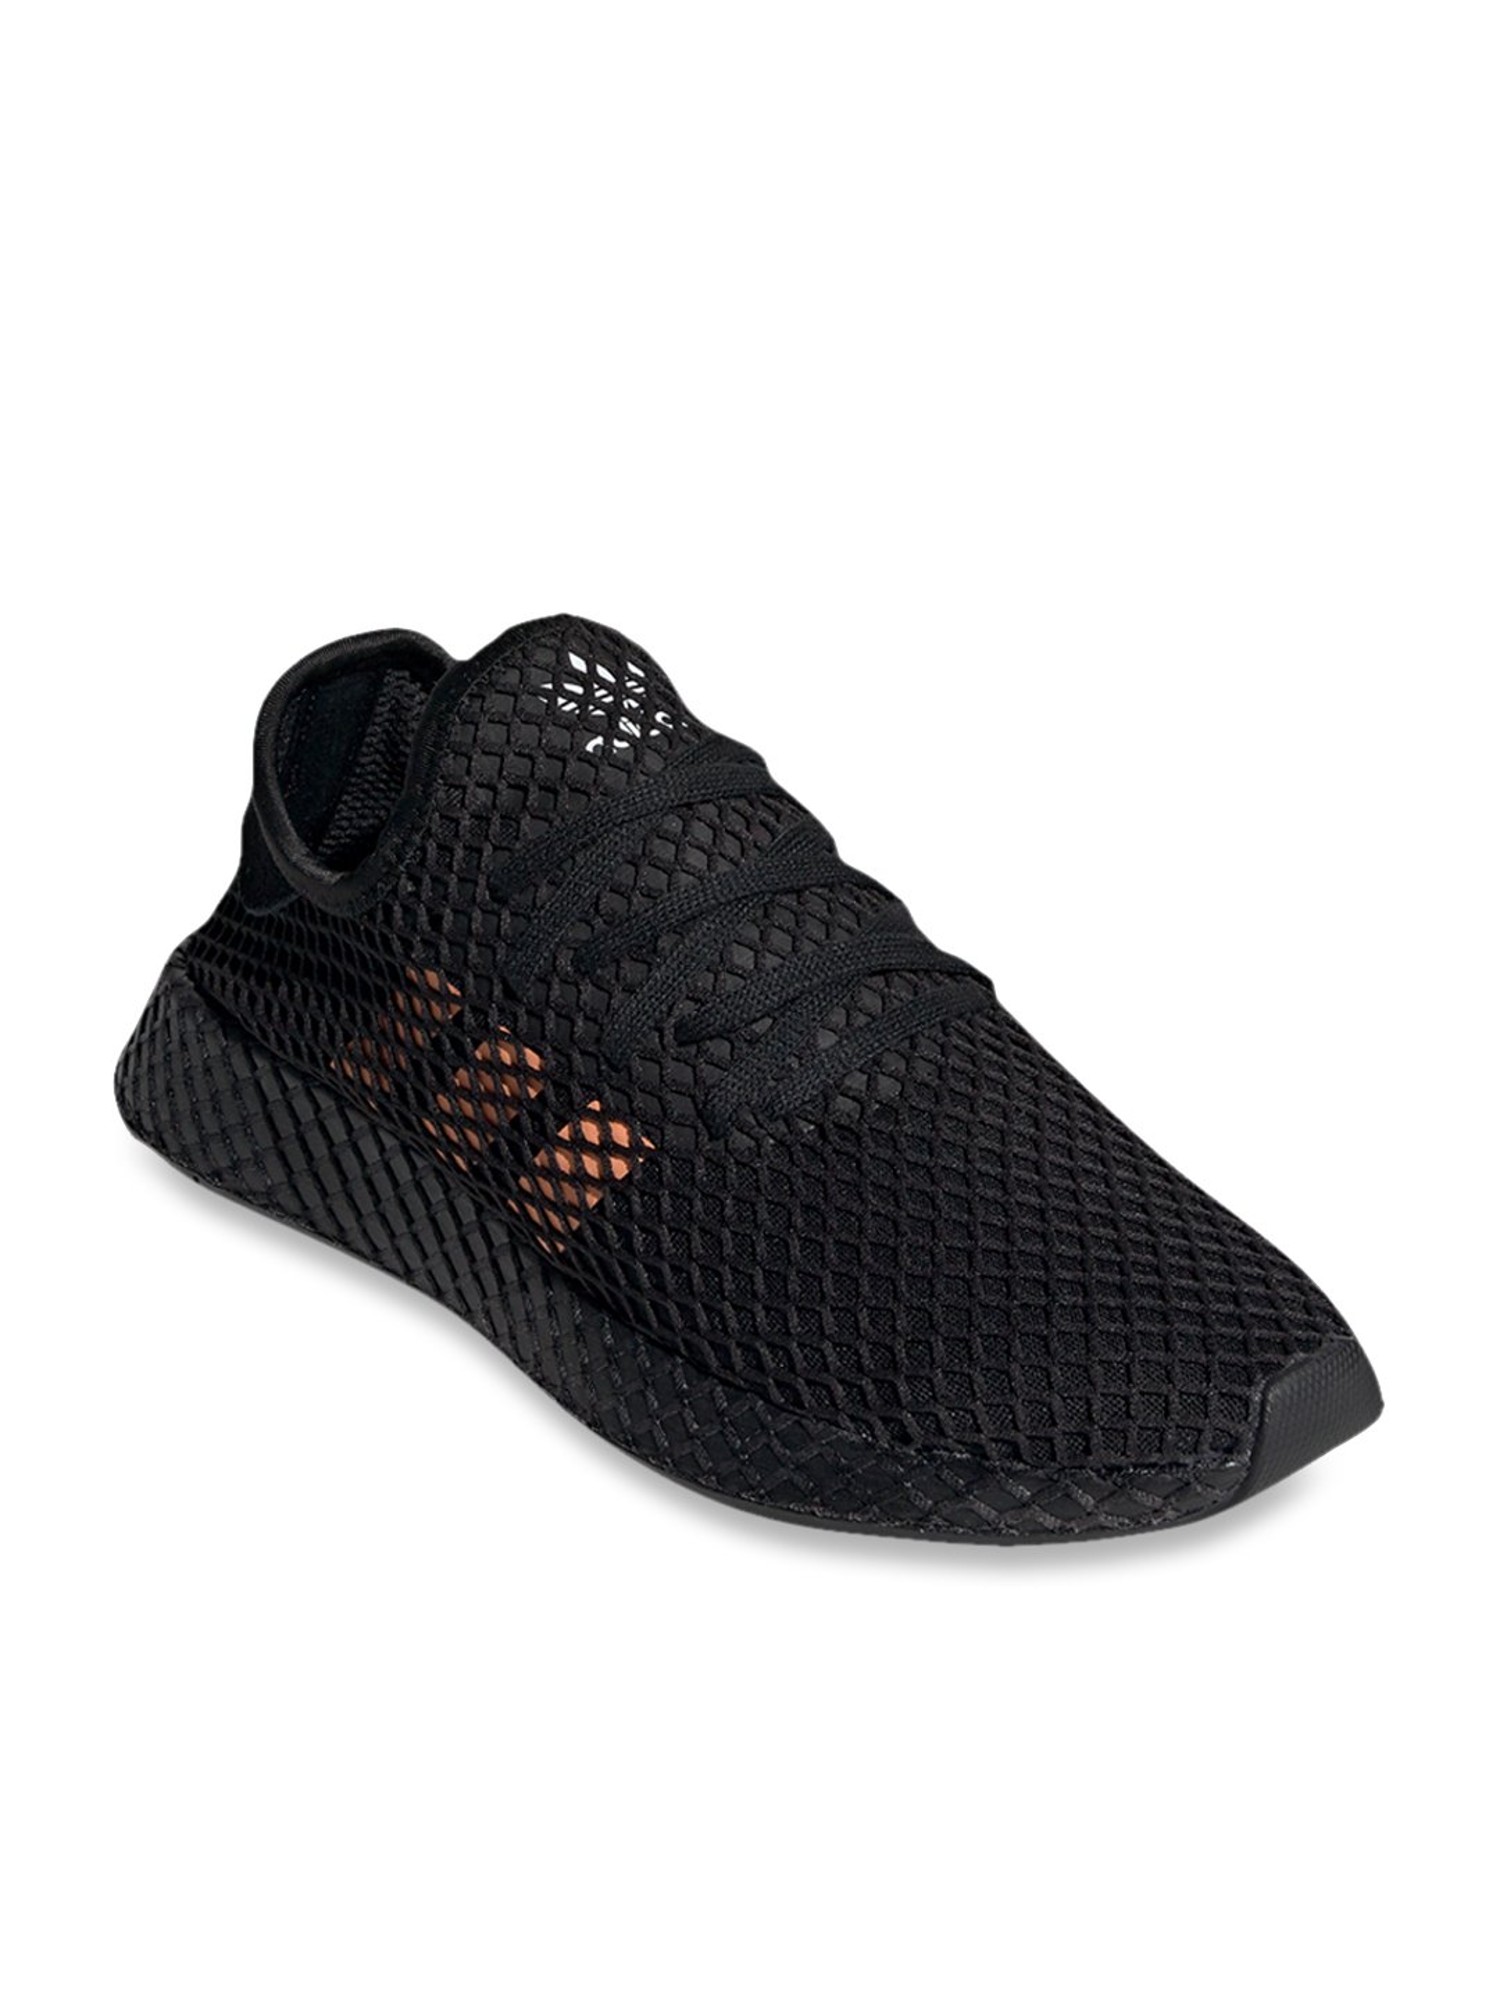 Adidas Originals Adidas Deerupt Runner Sneakers in Knit and Mesh. Size 5.5  | eBay